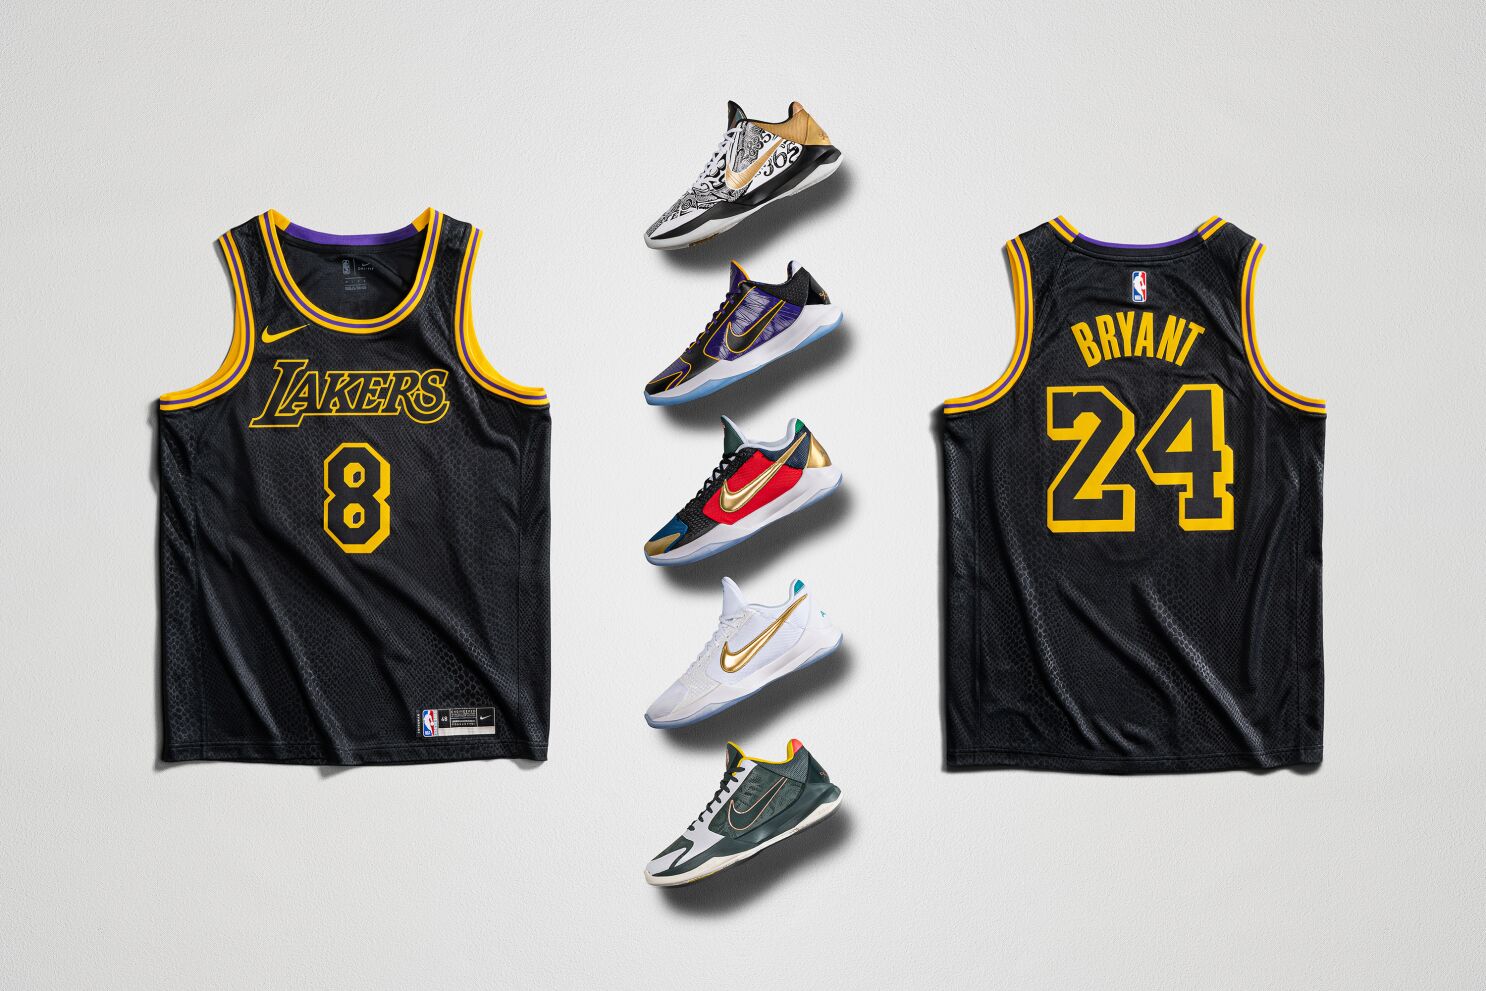 Desobediencia grado trolebús Nike Mamba Week to feature new Kobe Bryant sneakers, jersey - Los Angeles  Times